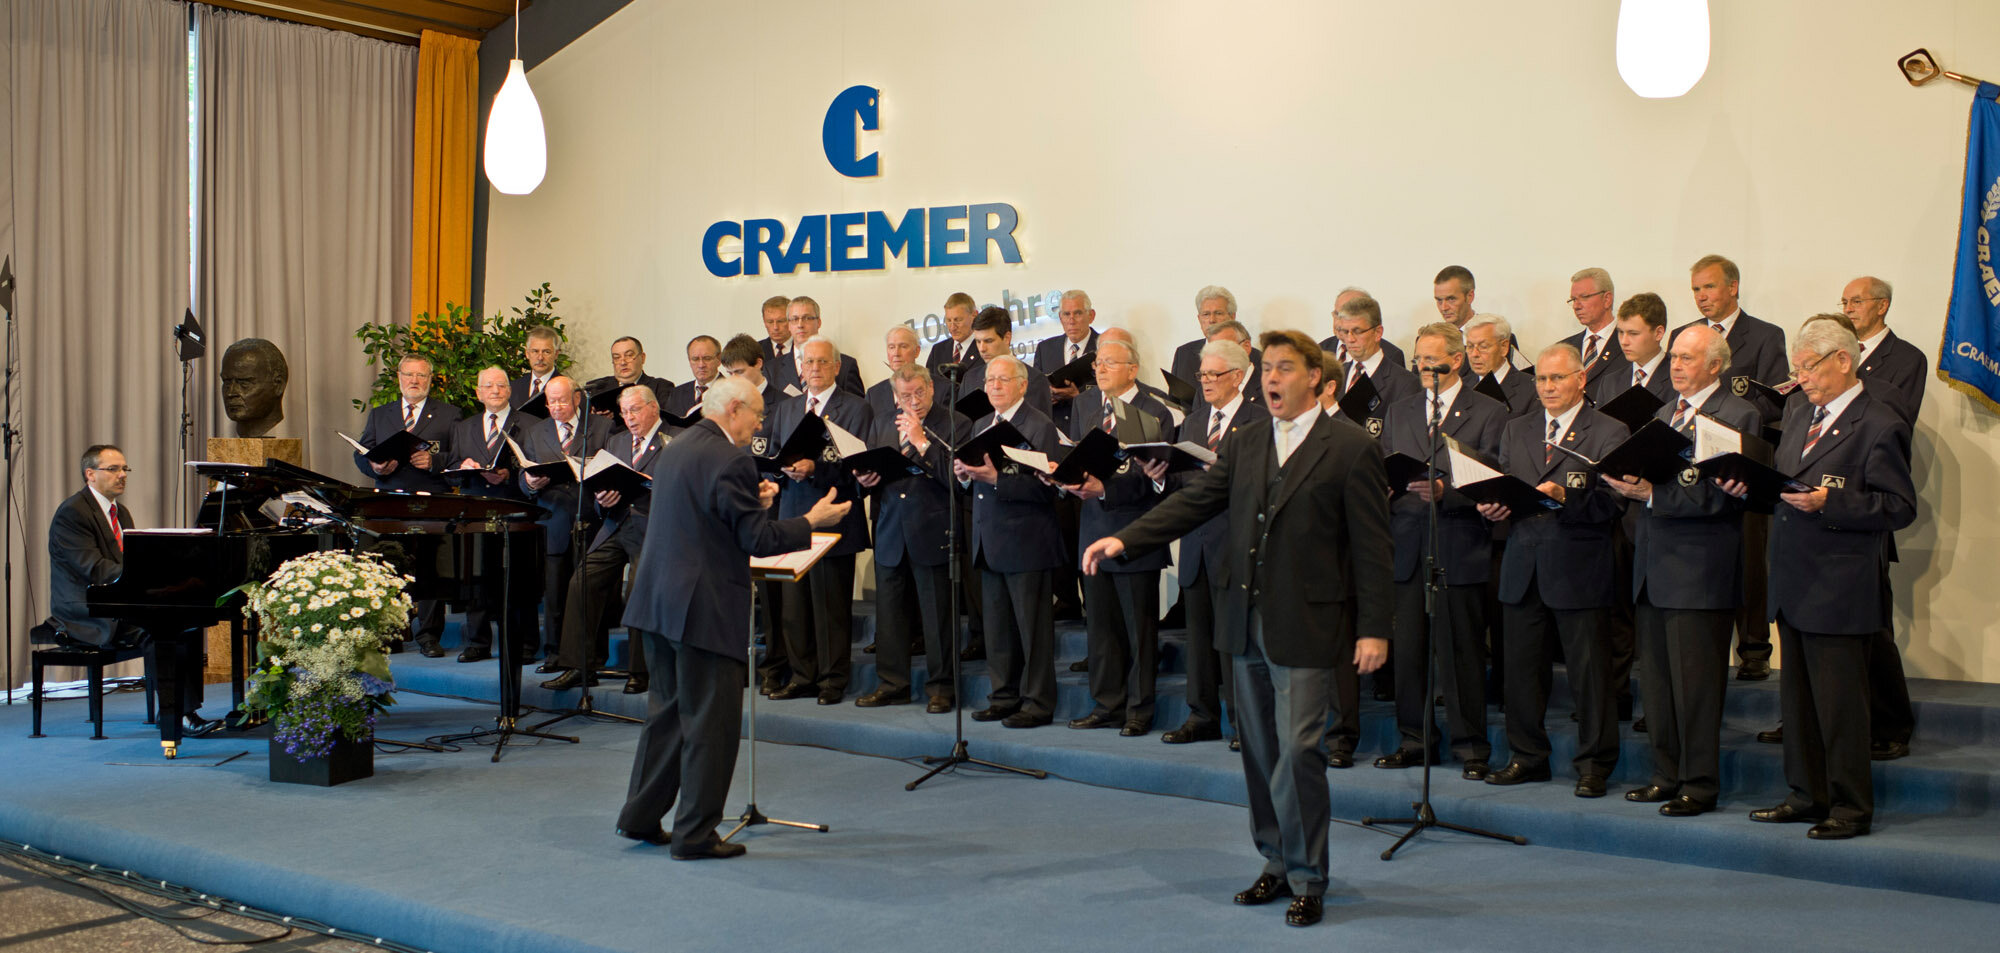 Craemer Chor